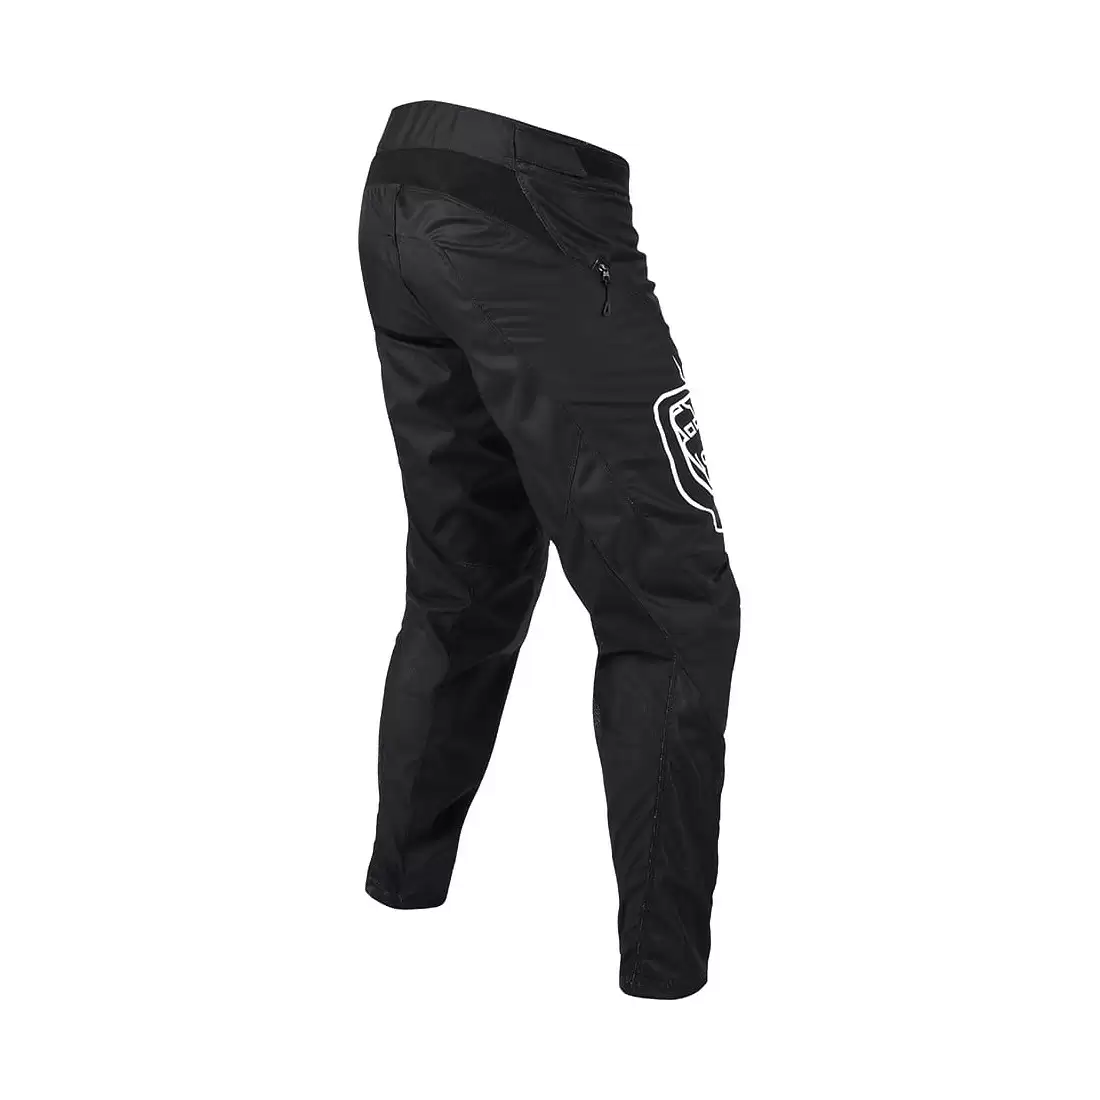 DH/Enduro Sprint MTB Long Pants Black Size M #1